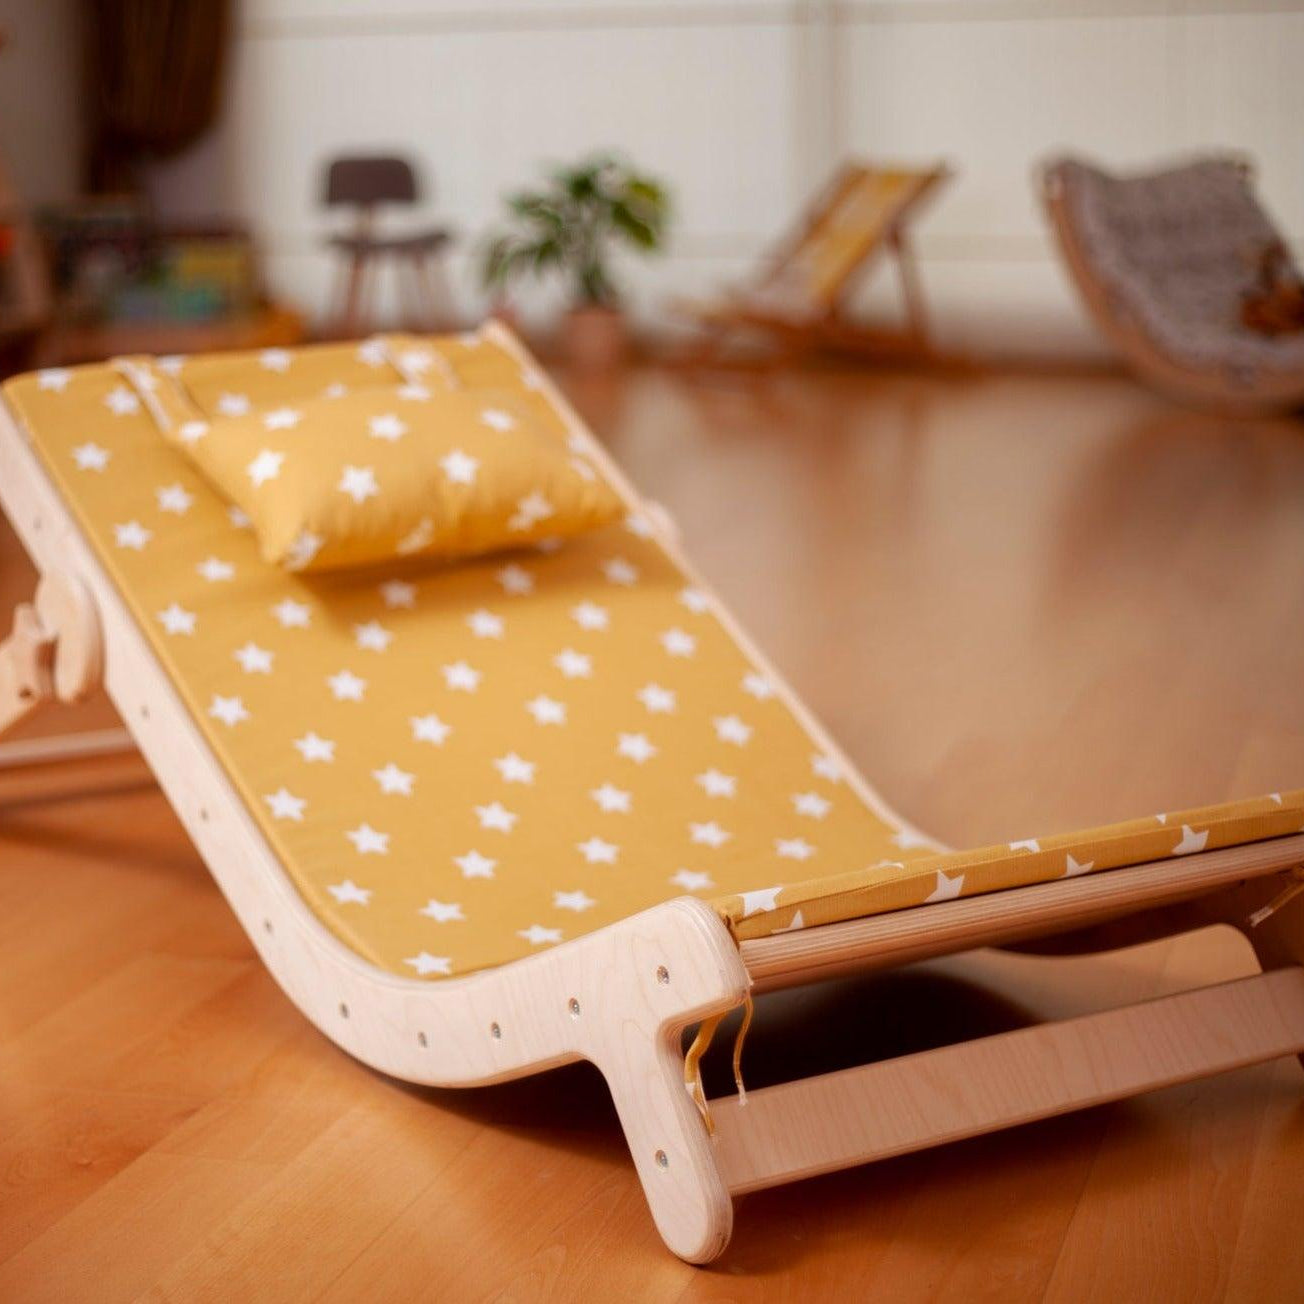 Adjustable lounge chair with comfy pad for kids - Kidodido